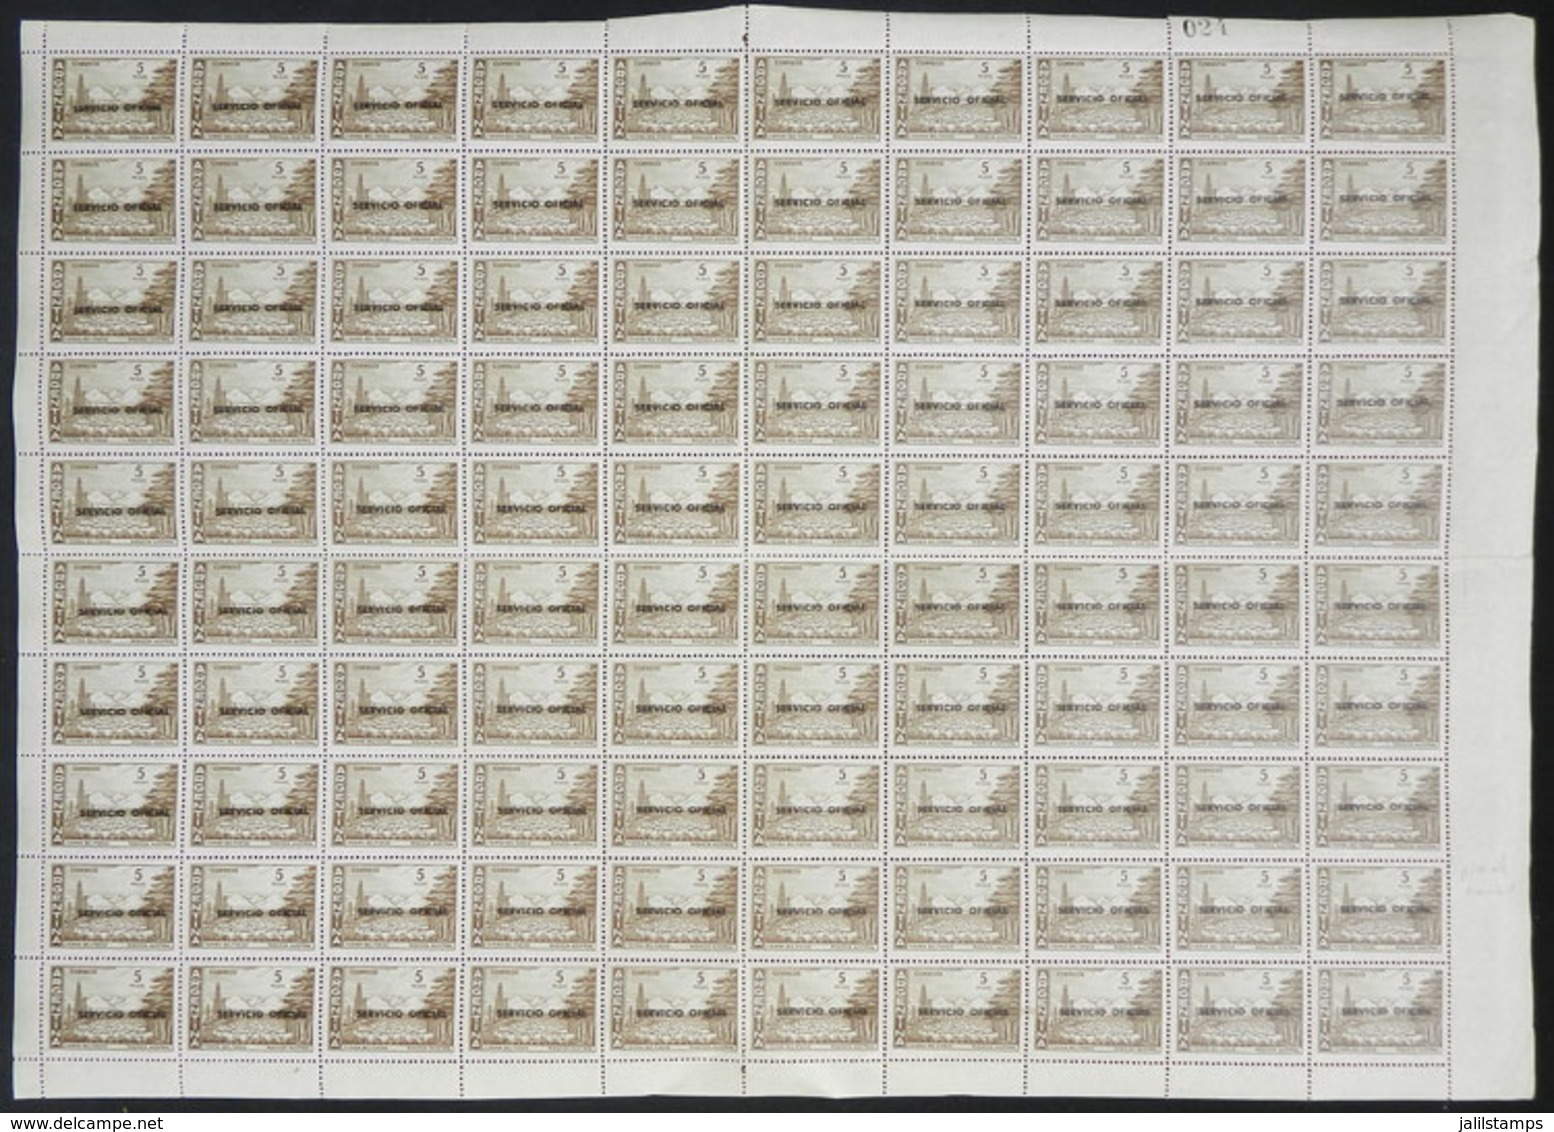 288 ARGENTINA: GJ.719, 5P. Southern Riches, Black Overprint, Complete Sheet Of 100 Stamps, MNH, VF Quality, Scarce! - Dienstzegels